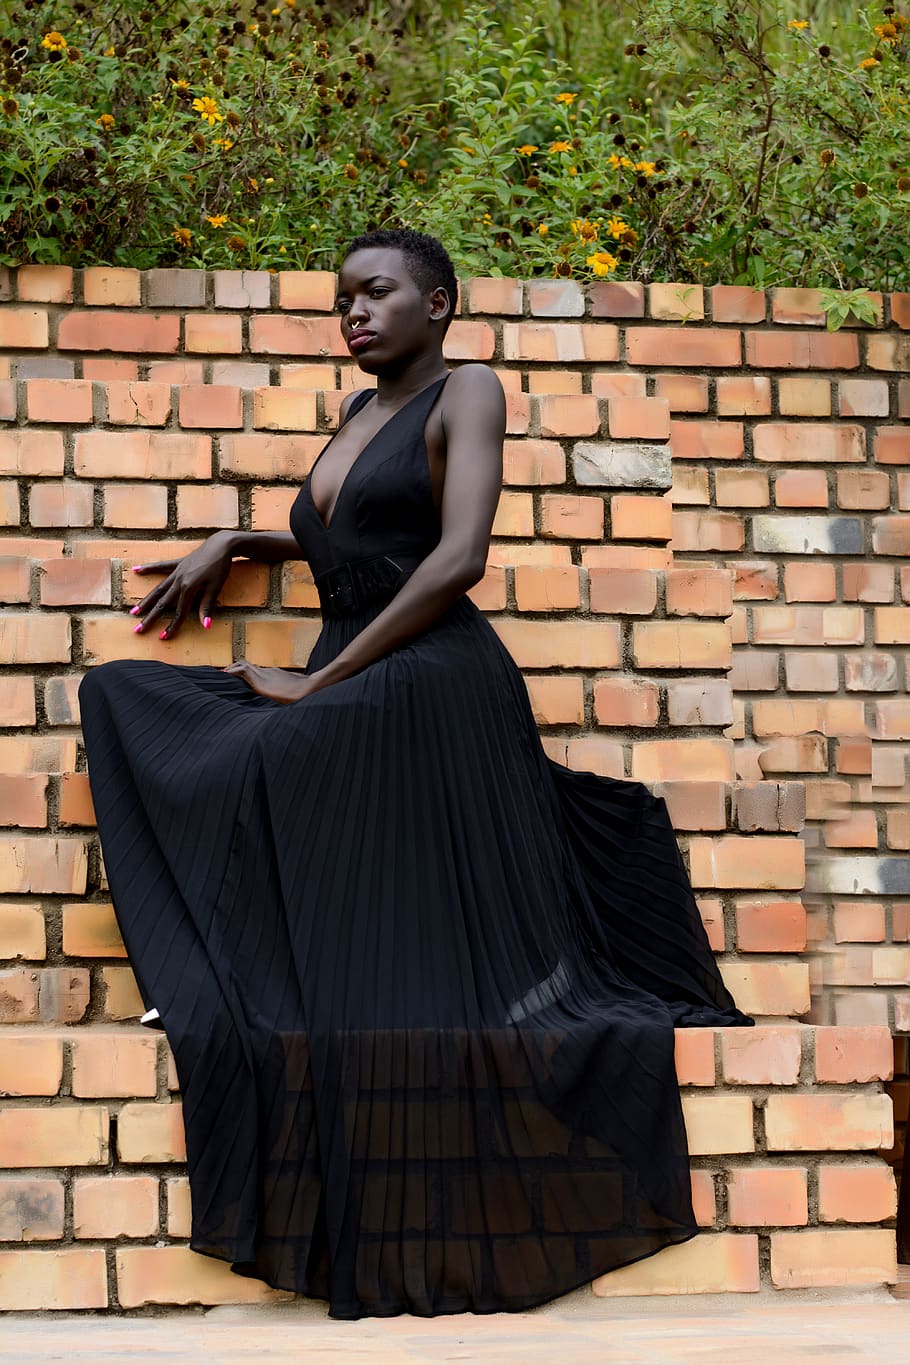 Black Satin Sleeveless Lace Insert Maxi Dress | PrettyLittleThing USA